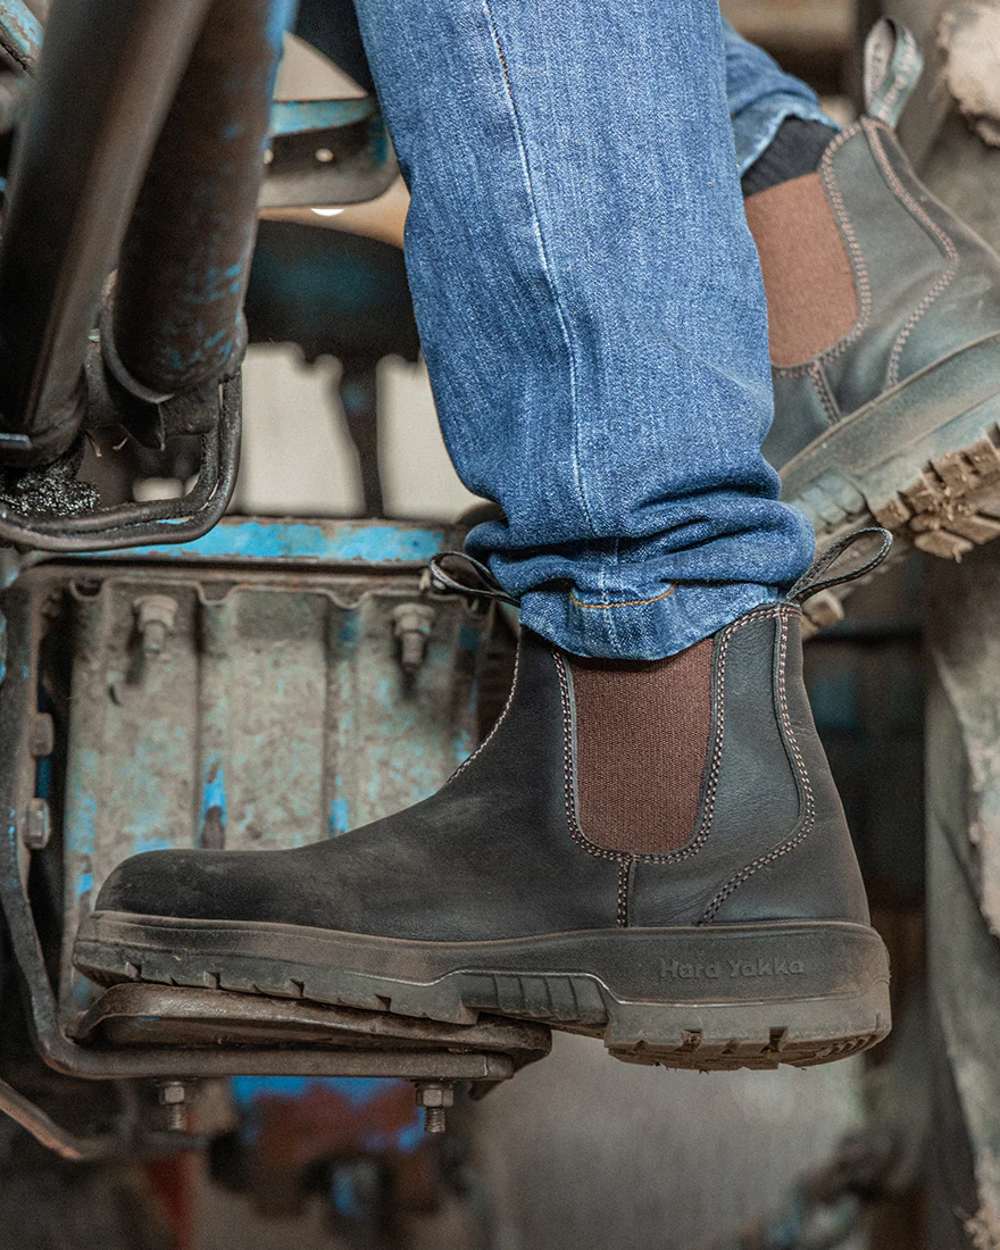 Hard Yakka Outback Steel Toe Safety Dealer Boot in Brown 